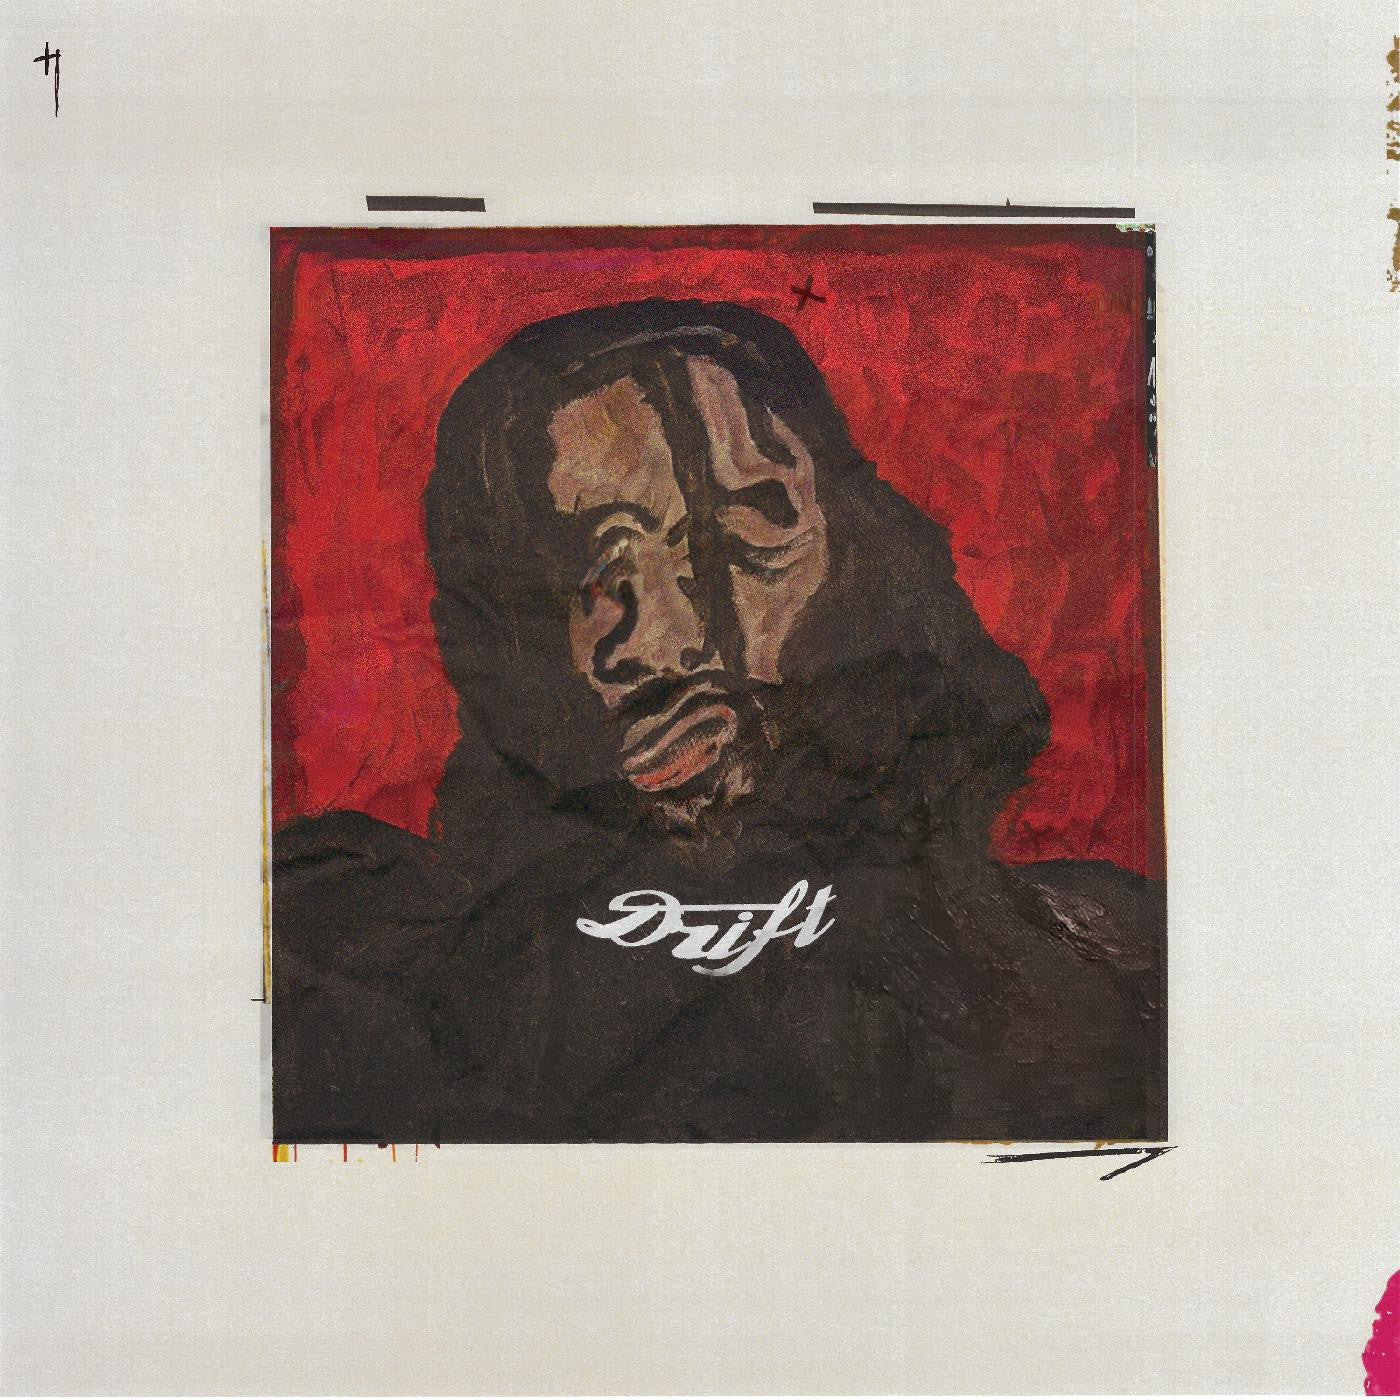 Gaika - DRIFT [Red Vinyl]